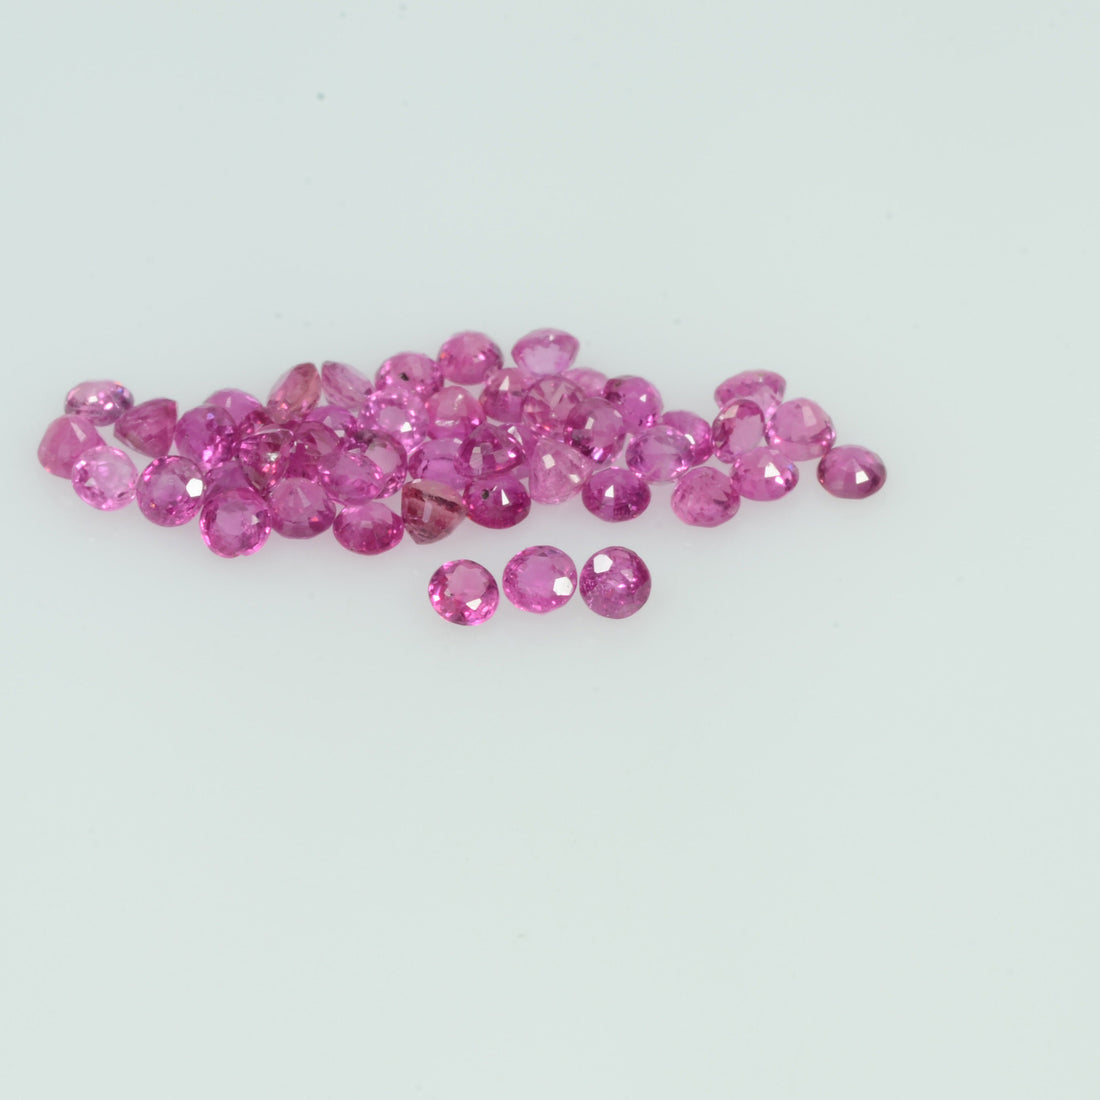 1.1-2.8 mm Natural Ruby Loose Gemstone Round Cut - Thai Gems Export Ltd.